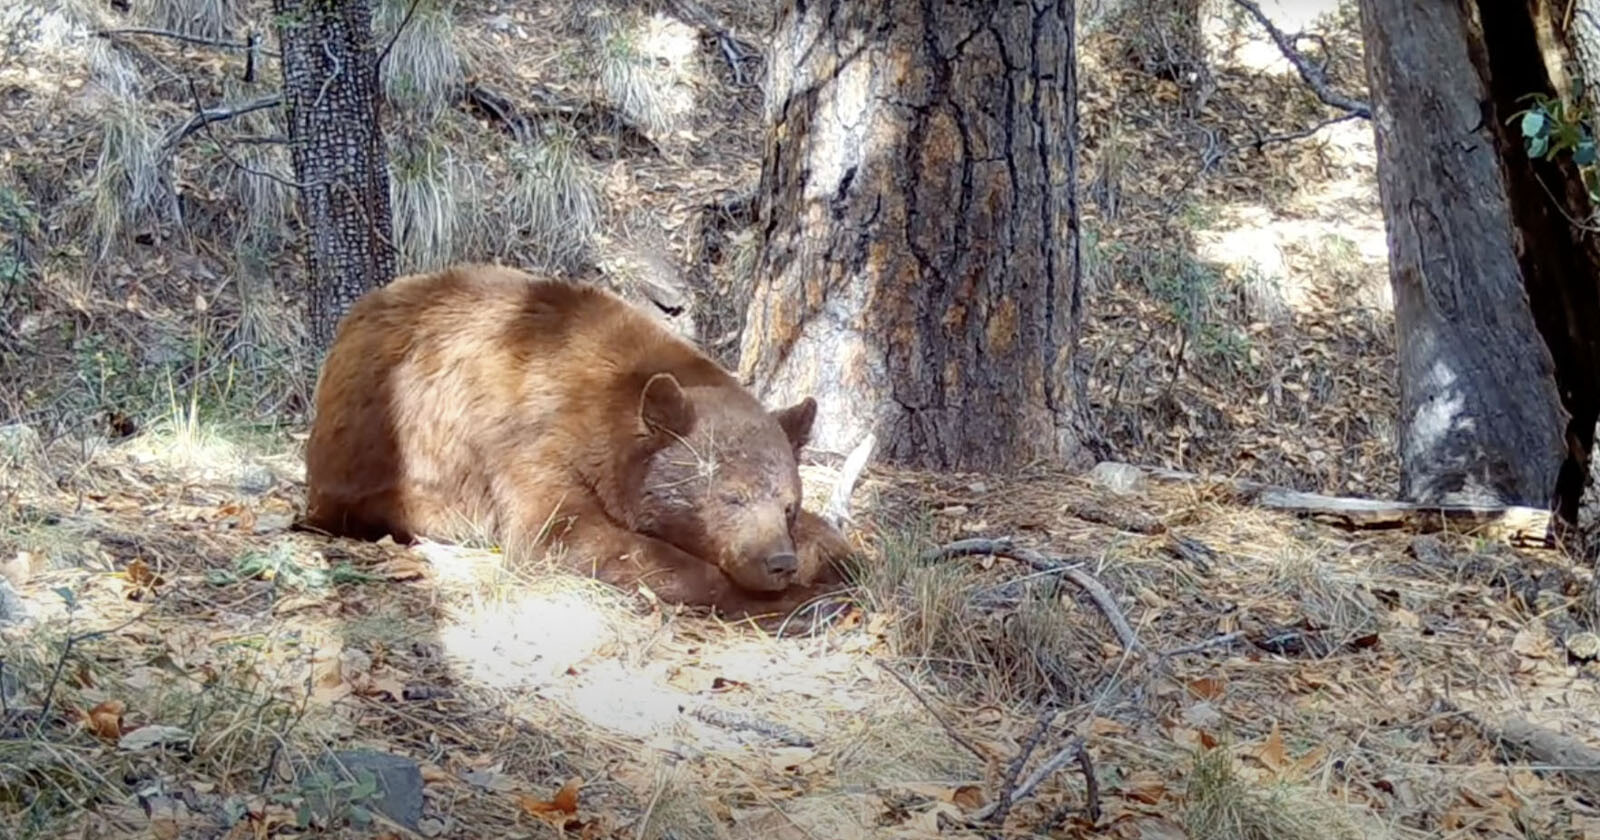  sleepy bear falls asleep front trail camera 